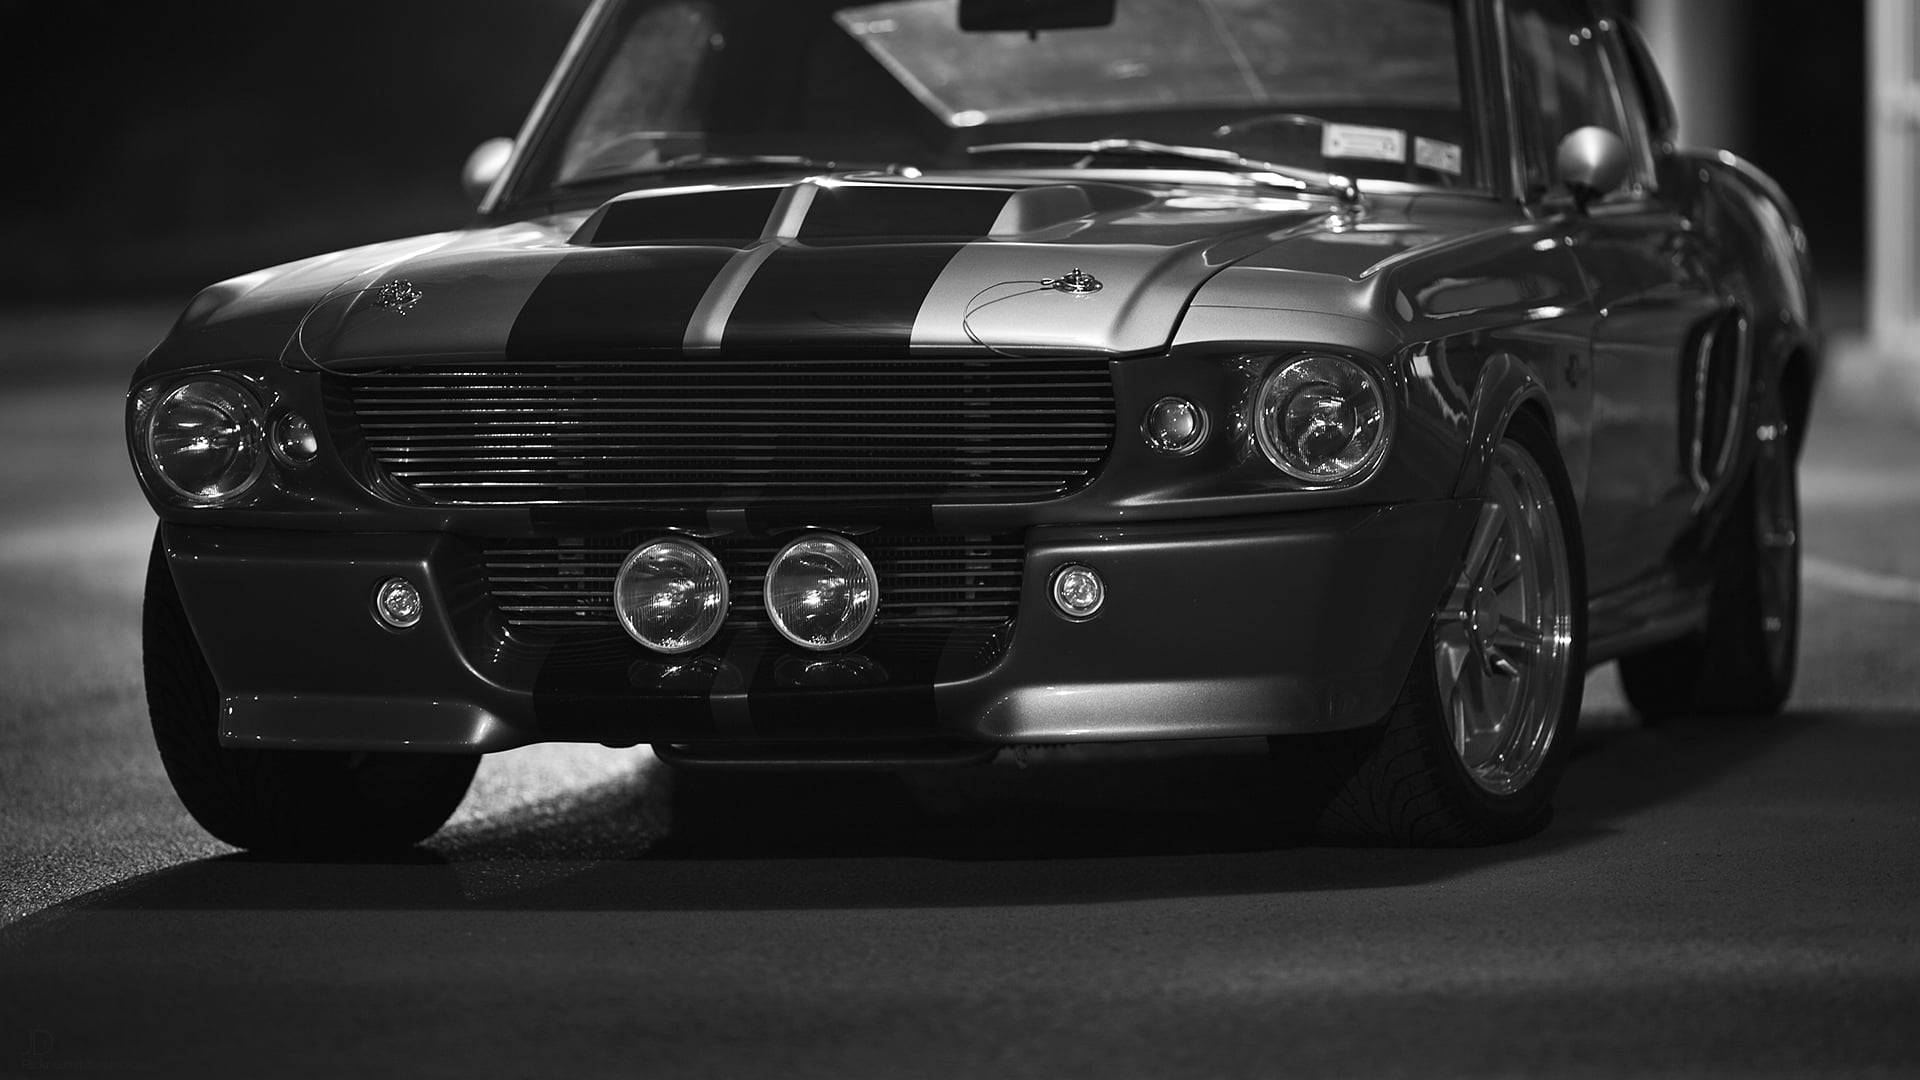 Ford Mustang Hd Black Aesthetic Wallpaper